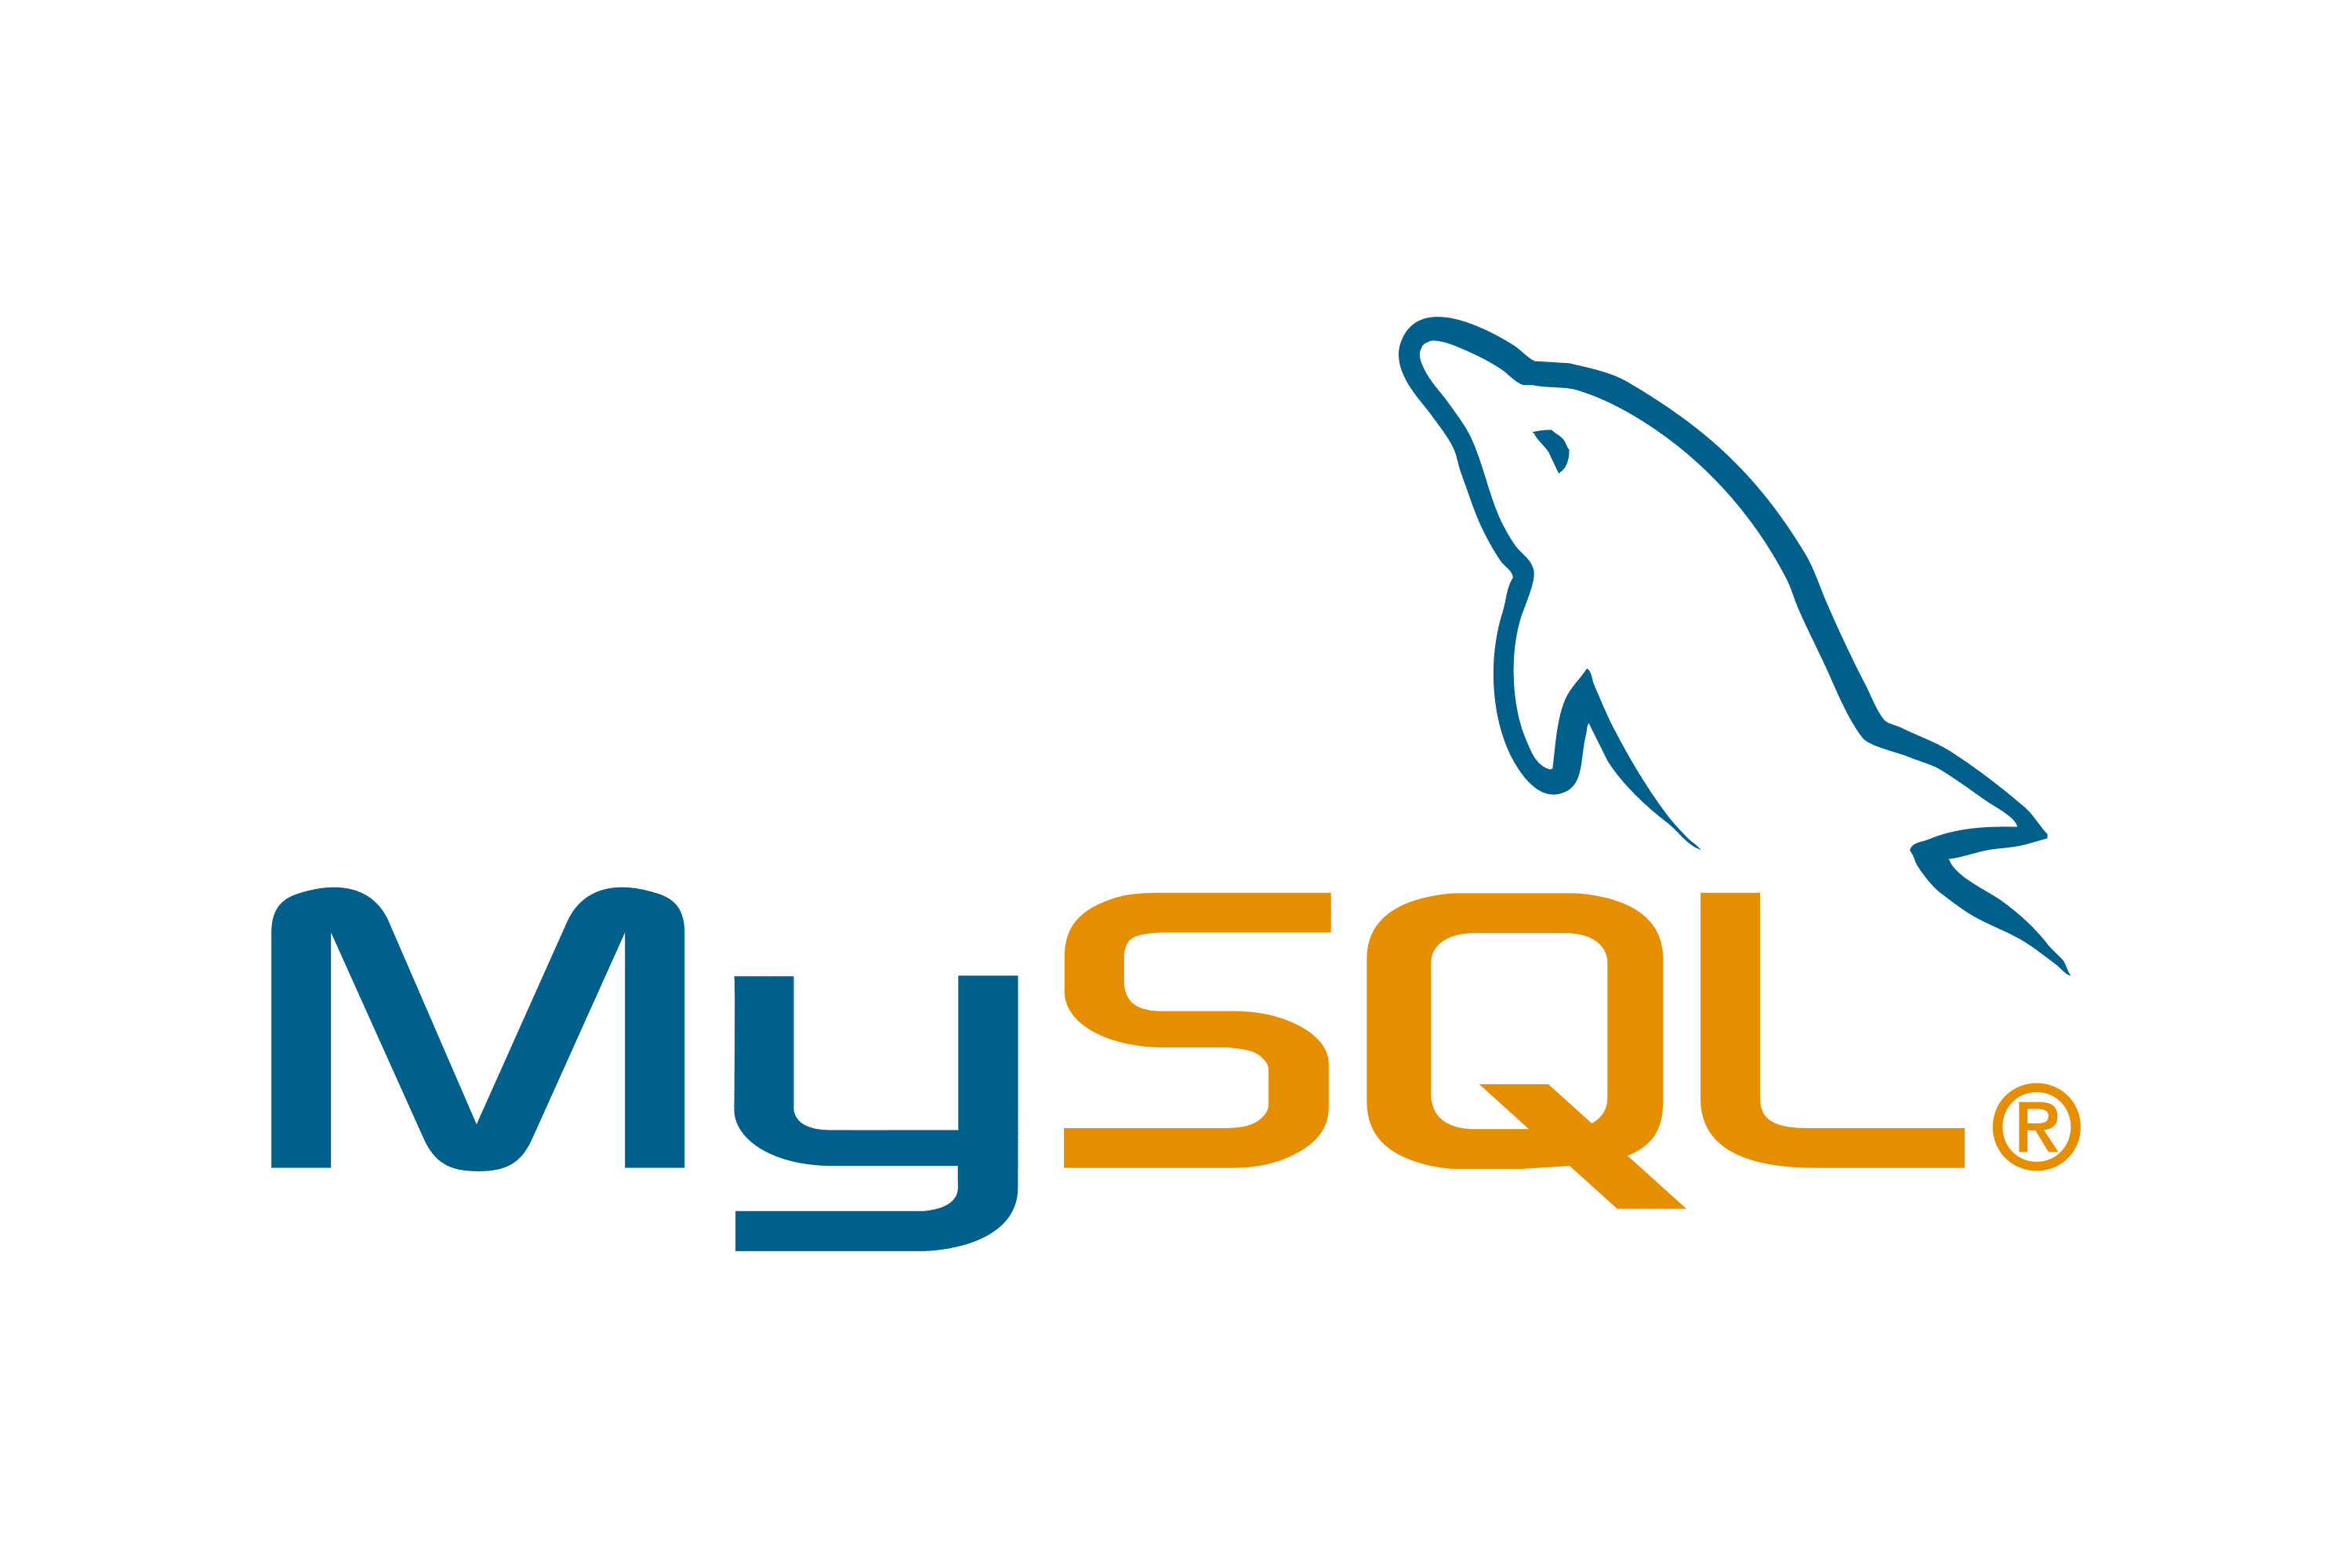 MySQLのロゴ─傾いた青いイルカ全身とテキスト